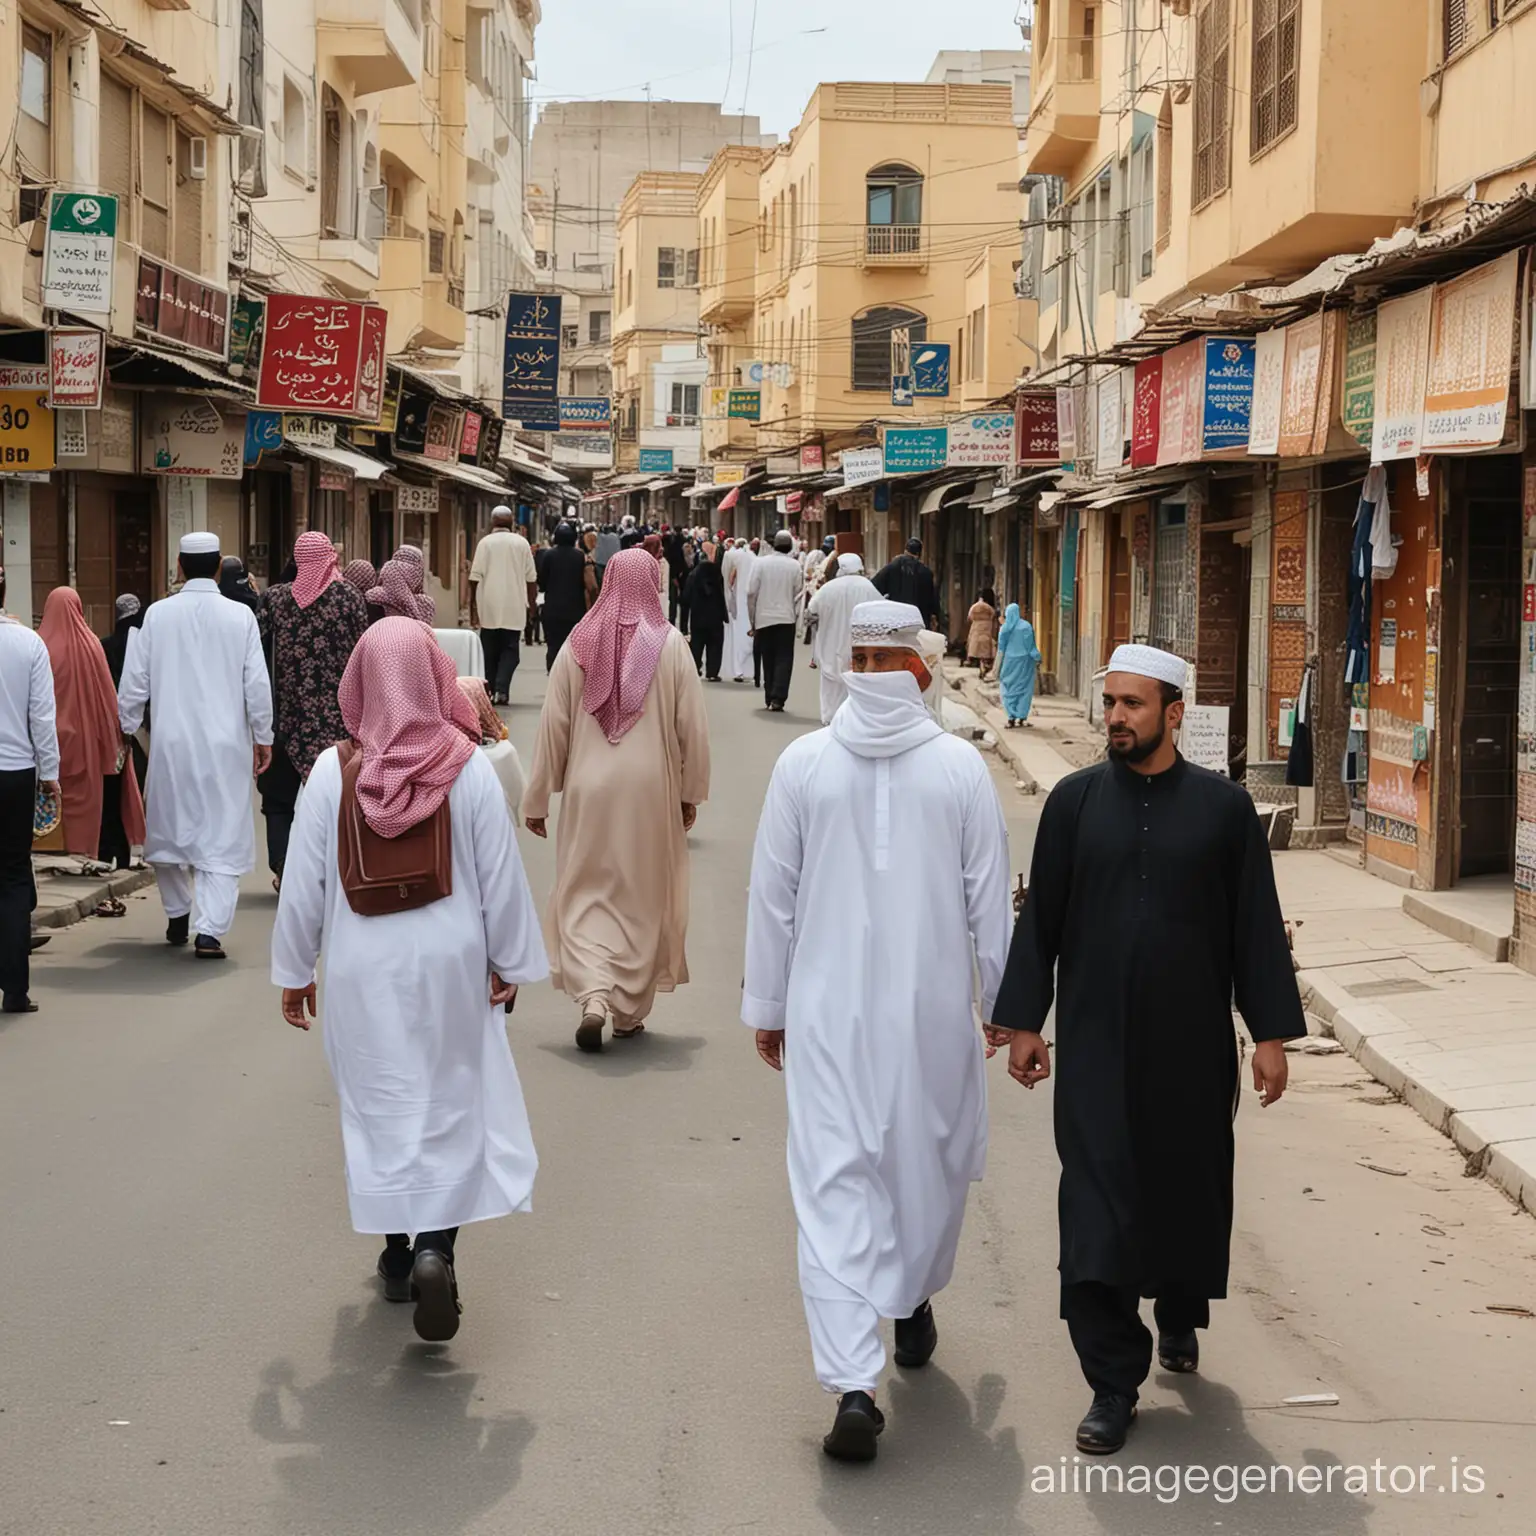 Muslim-Street-Vibrant-Market-Stalls-and-Traditional-Fashion